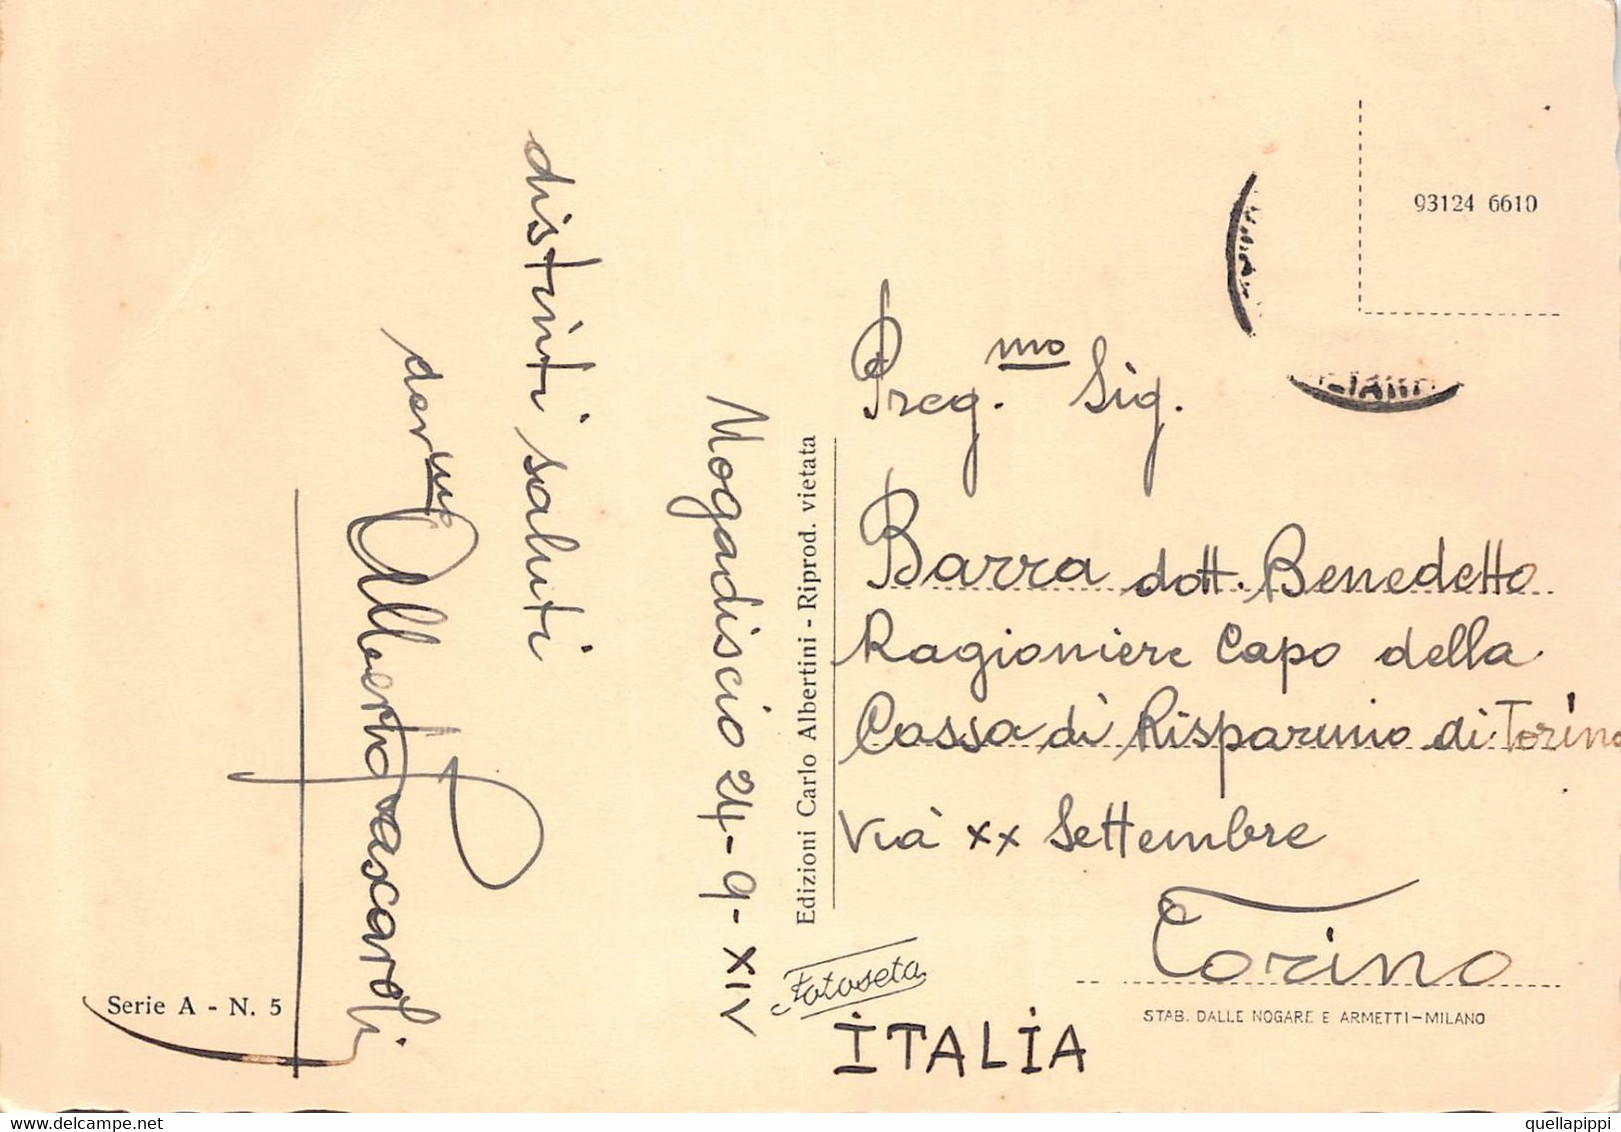 013818 "SOMALIA ITALIANA - MOGADISCIO - ALBERGO CROCE DEL SUD" ANIMATA.  CART SPED 1914 - Somalia